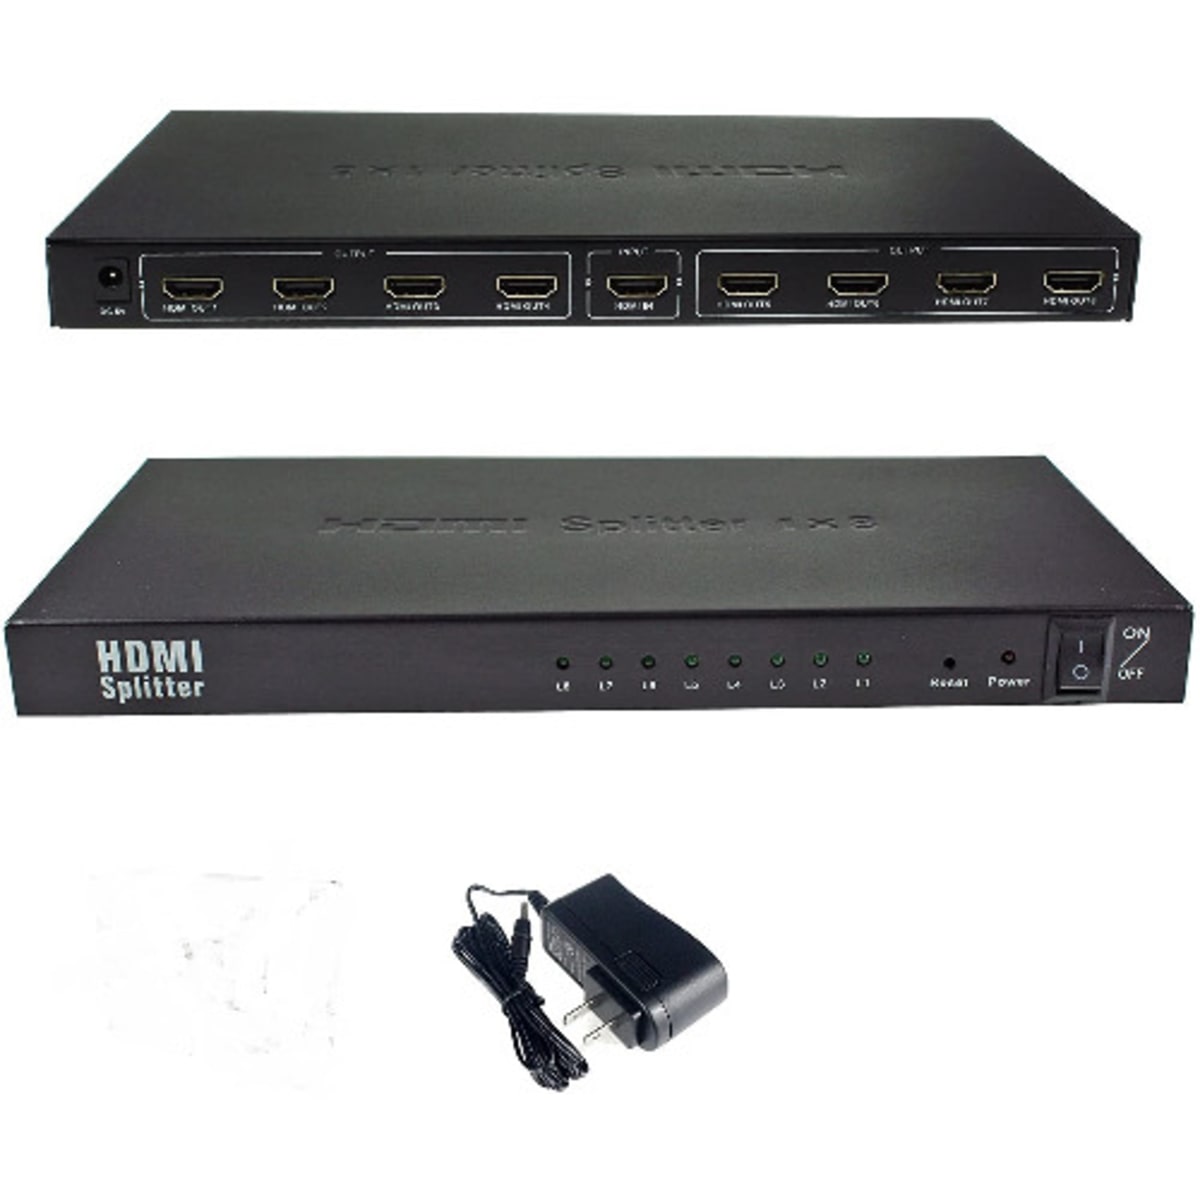 HDMI ™ Splitter, 8-Port port(s), HDMI™ ingång